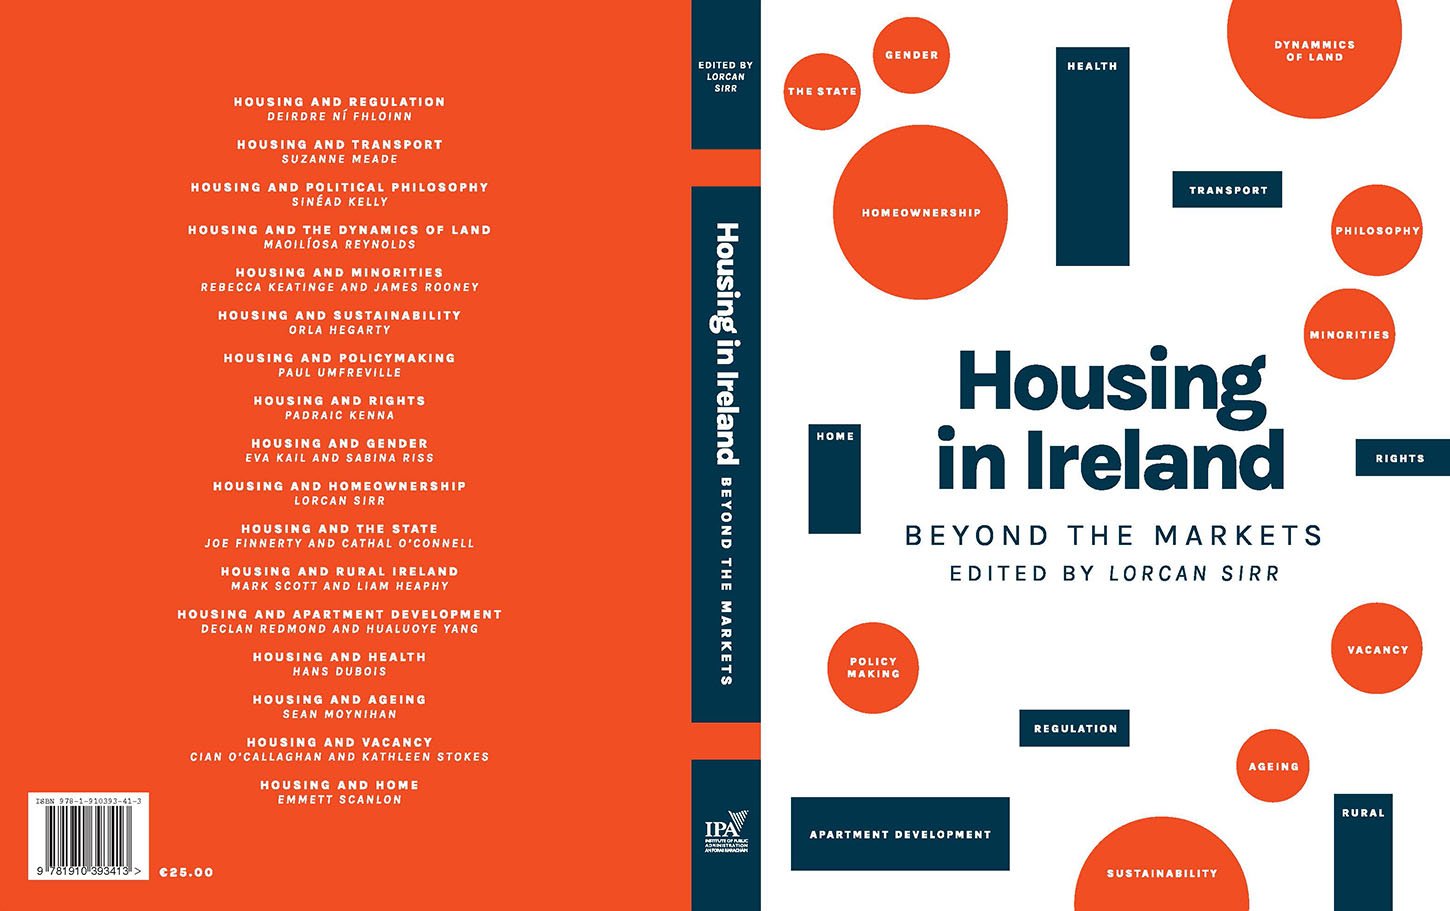 LSIRR_Housing in Ireland_Book Cover Concepts_V3.1_Final PR.jpg